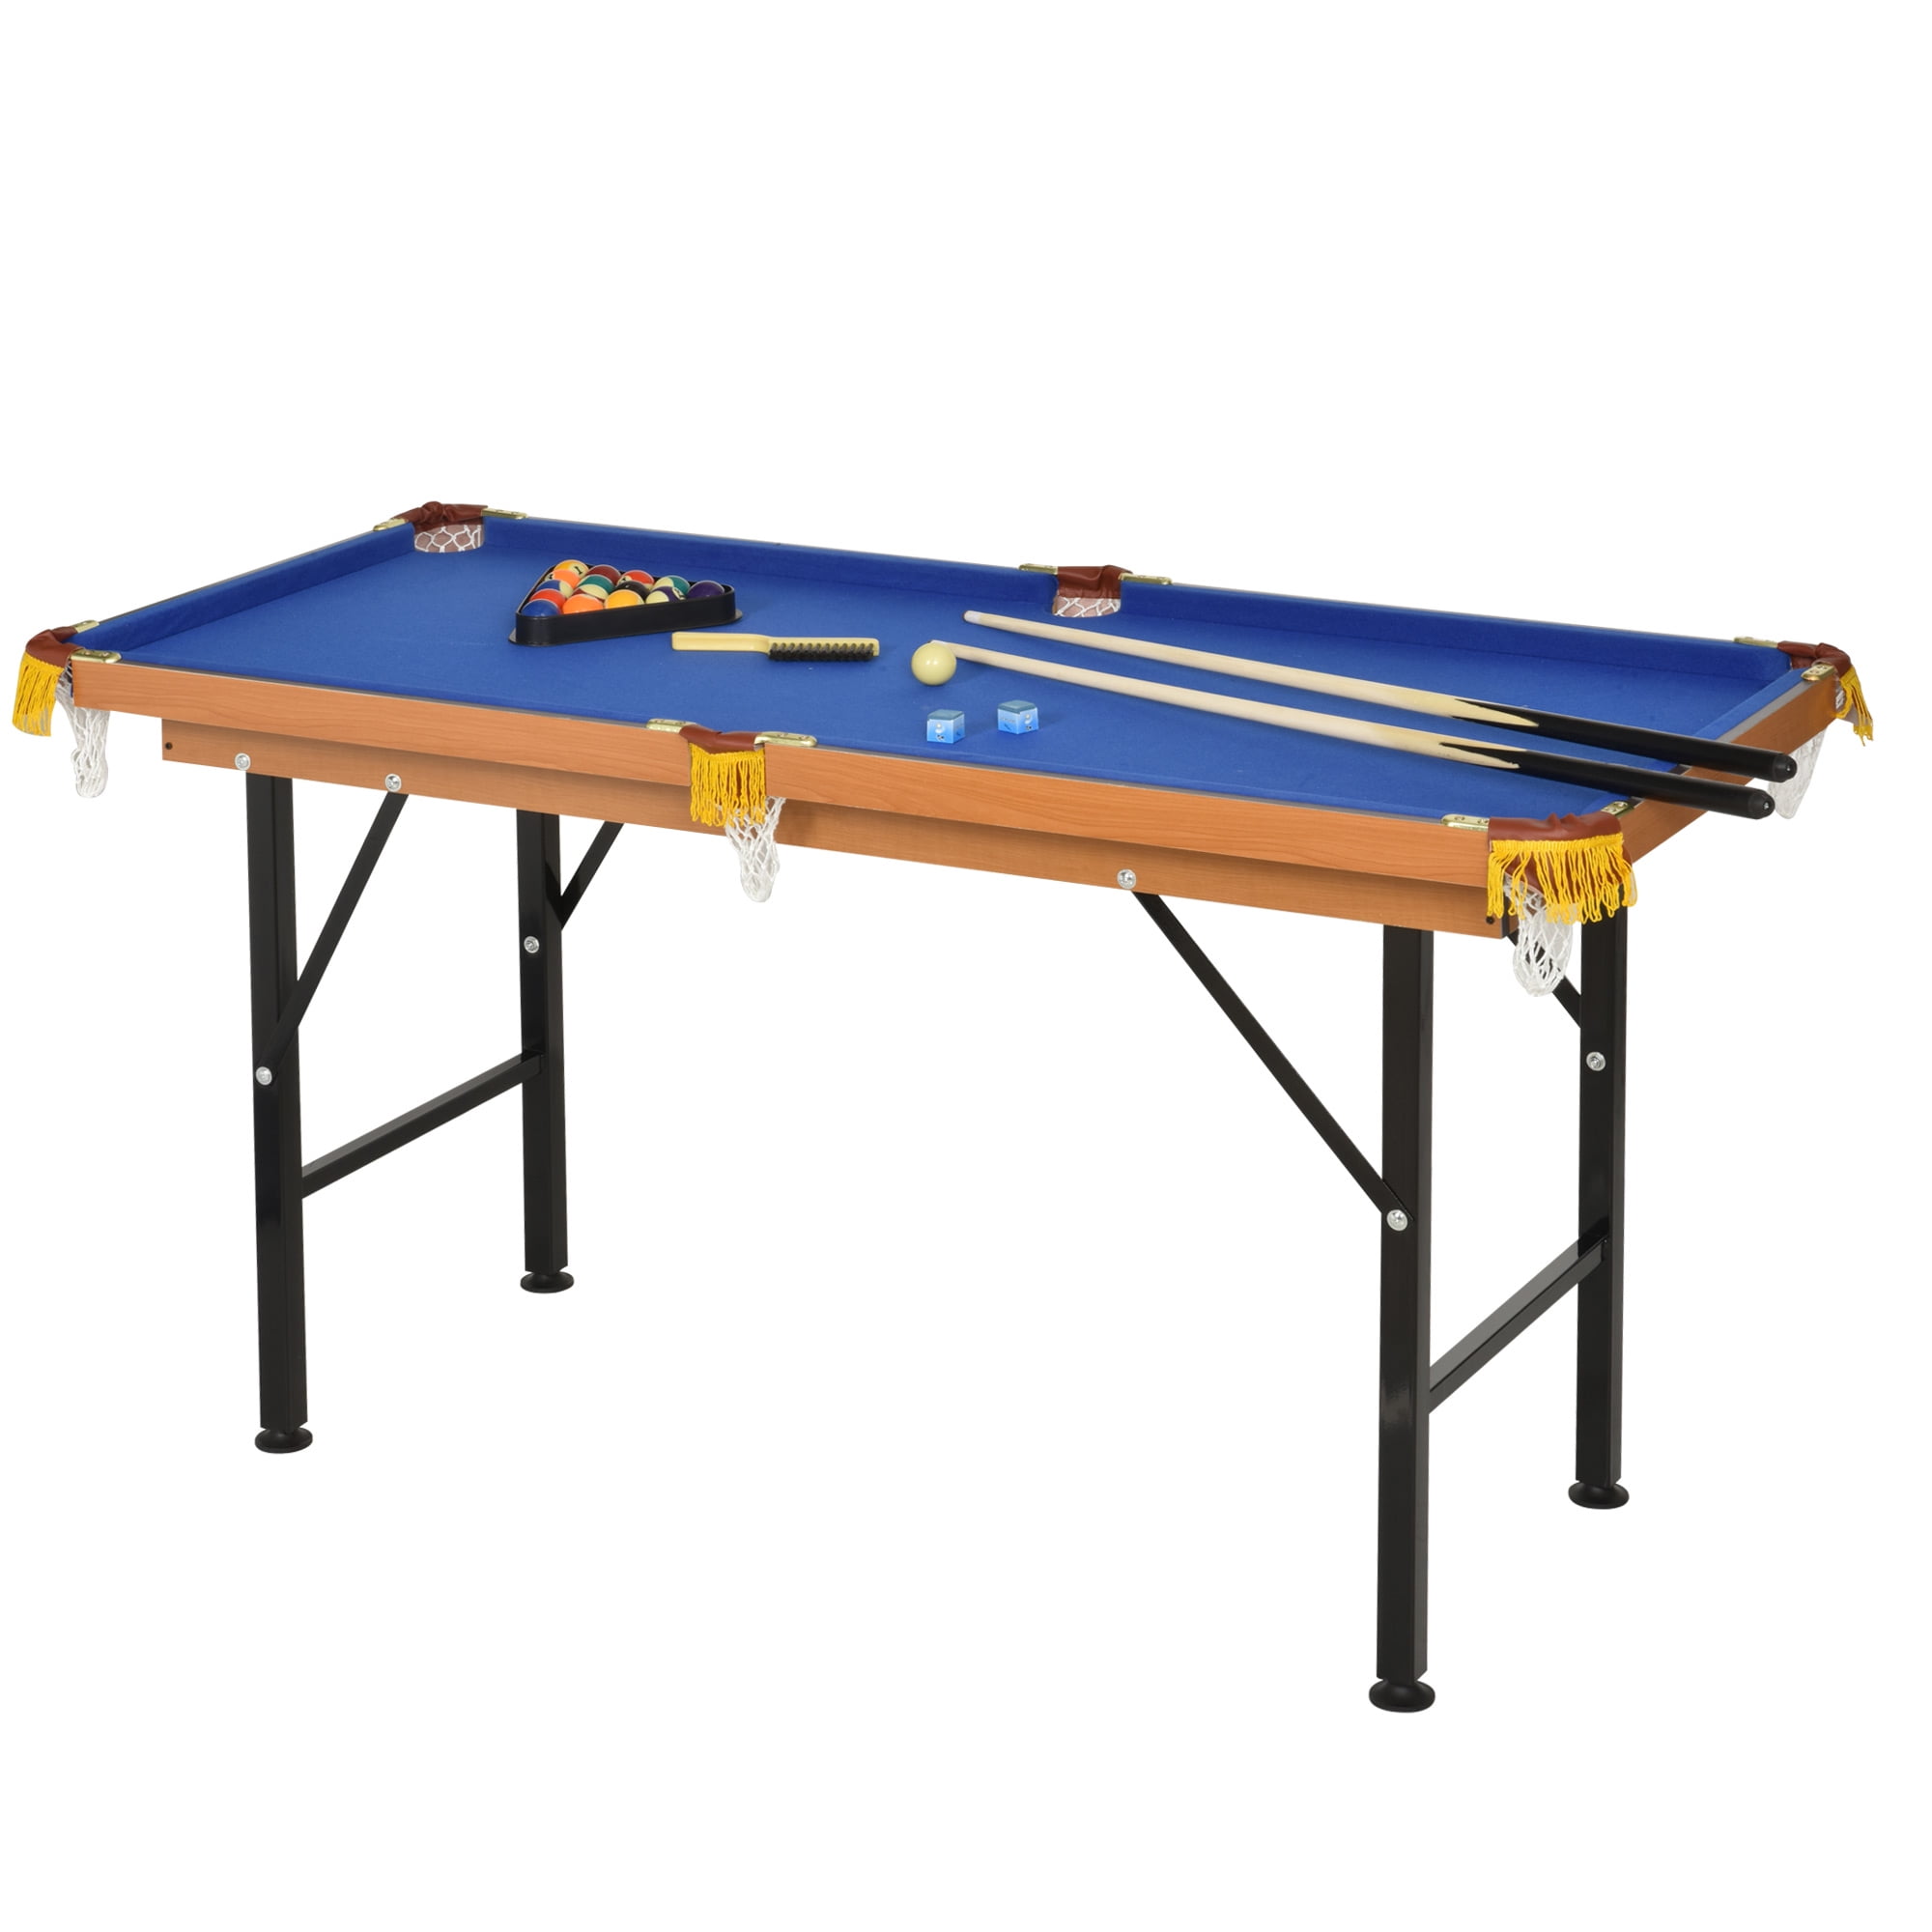 Amusingtao Billiard Table Felt Pool Cloth Snooker Indoor Sports Game Table Cloth with 6 Cushion Cloth Strip for 7//8//9 Foot Billiard Pool